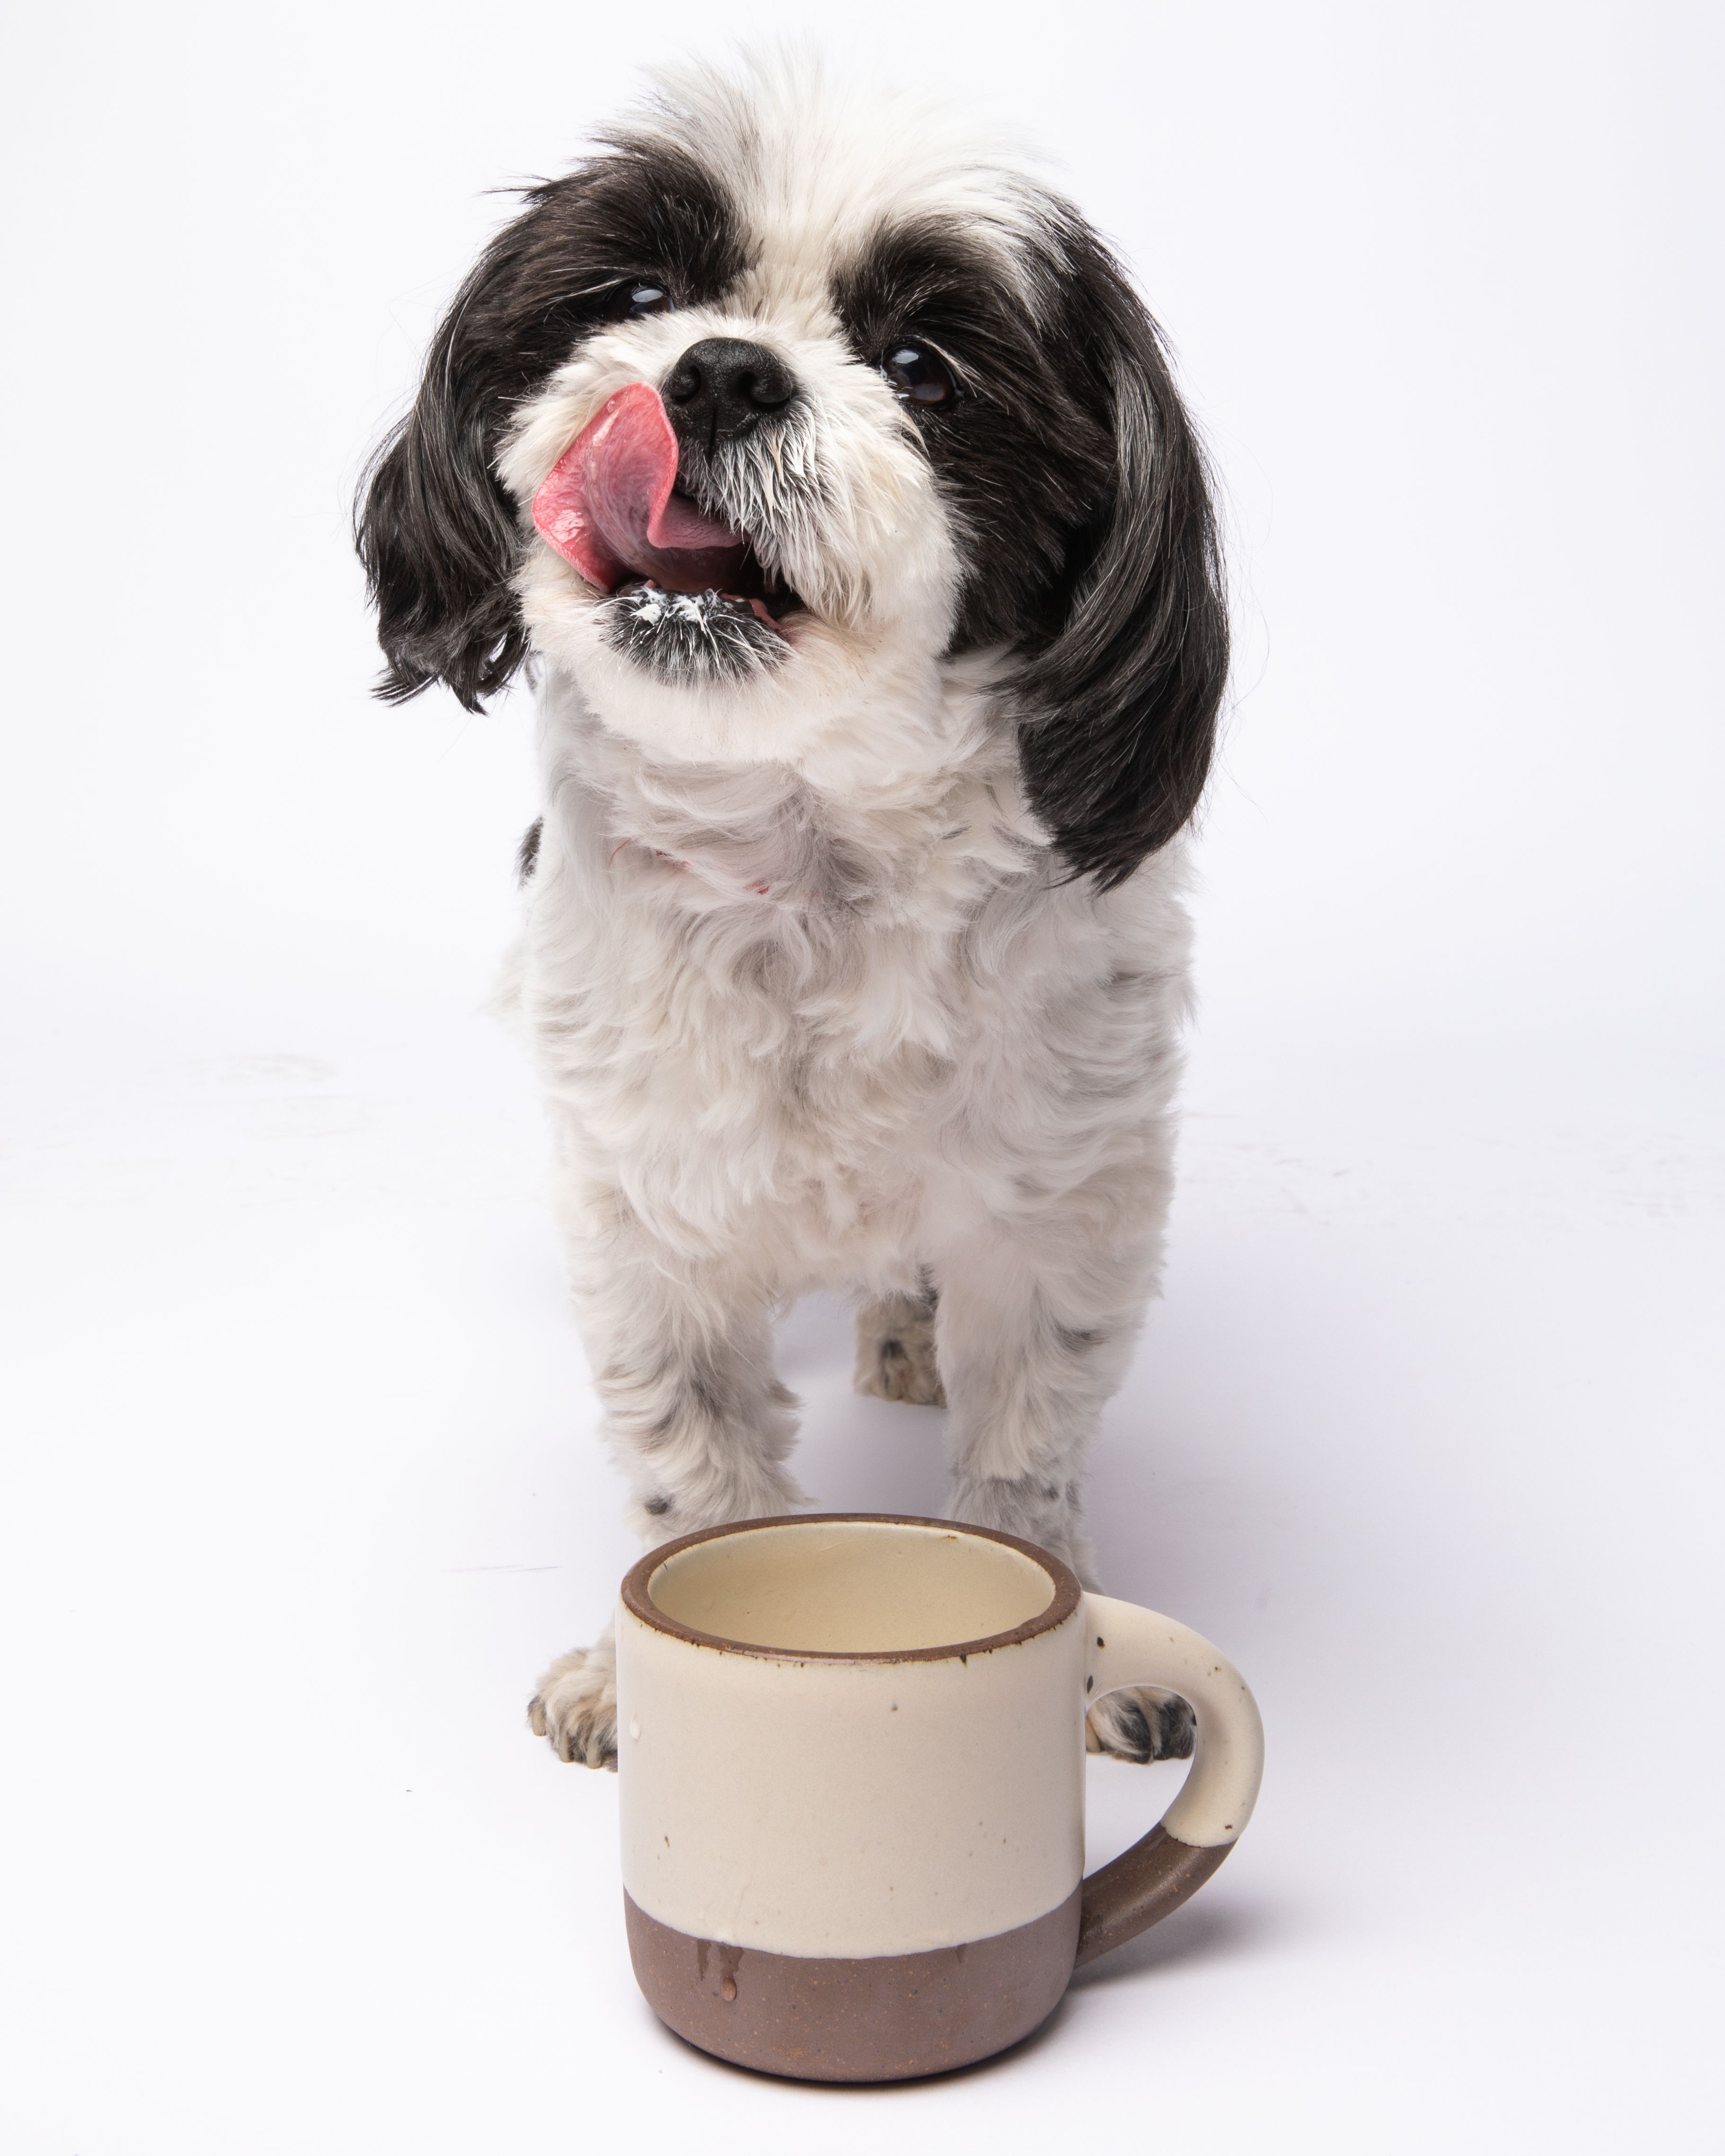 Bella, the small dog, poses with The Small Mug.